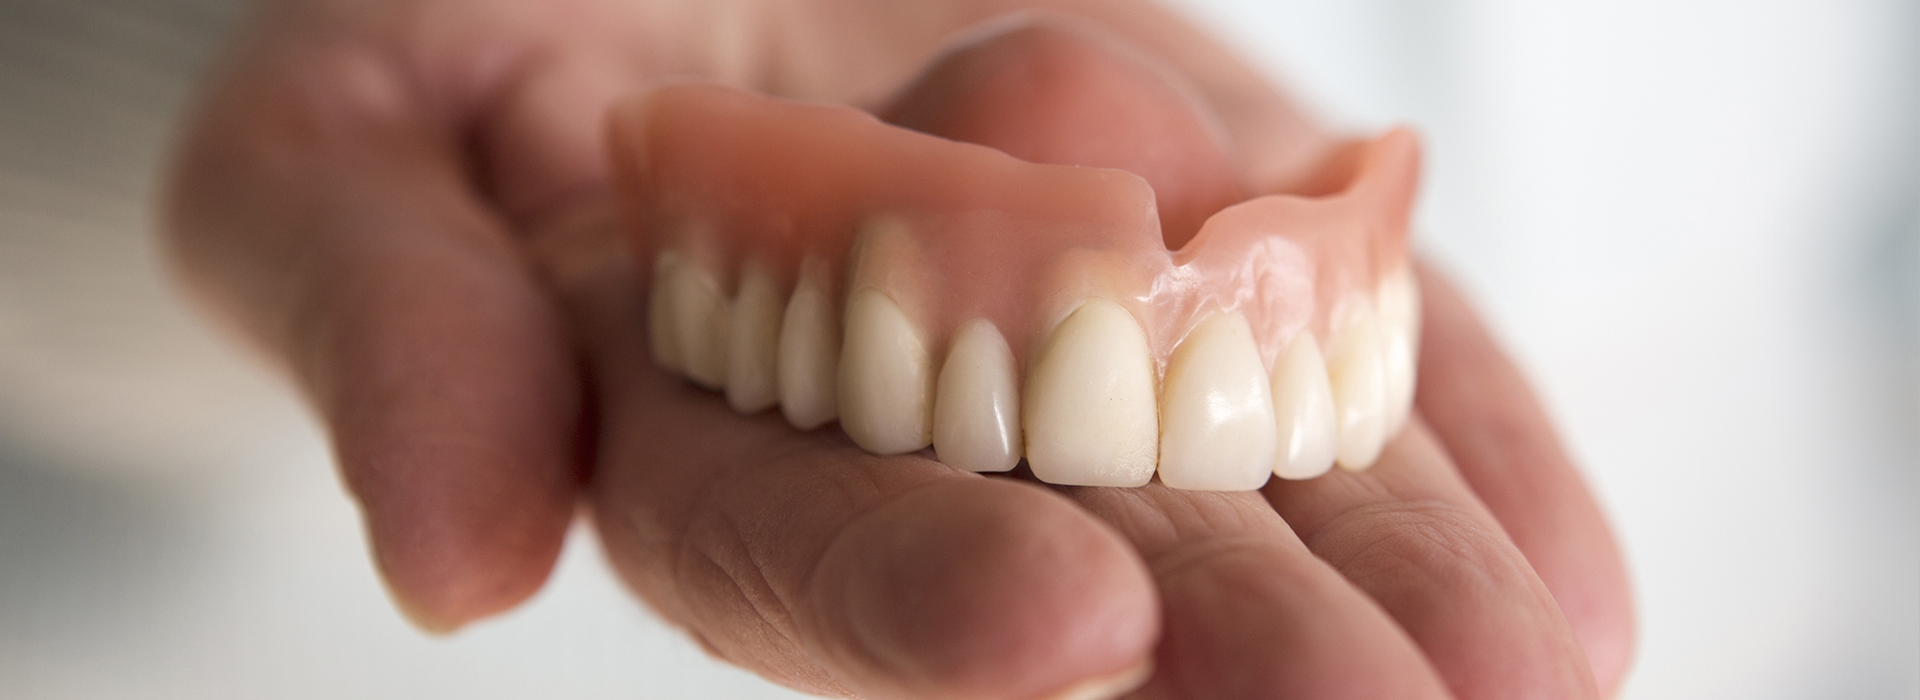 NoblePro Dental | E4D, Dental Sealants and ClearCorrect reg 